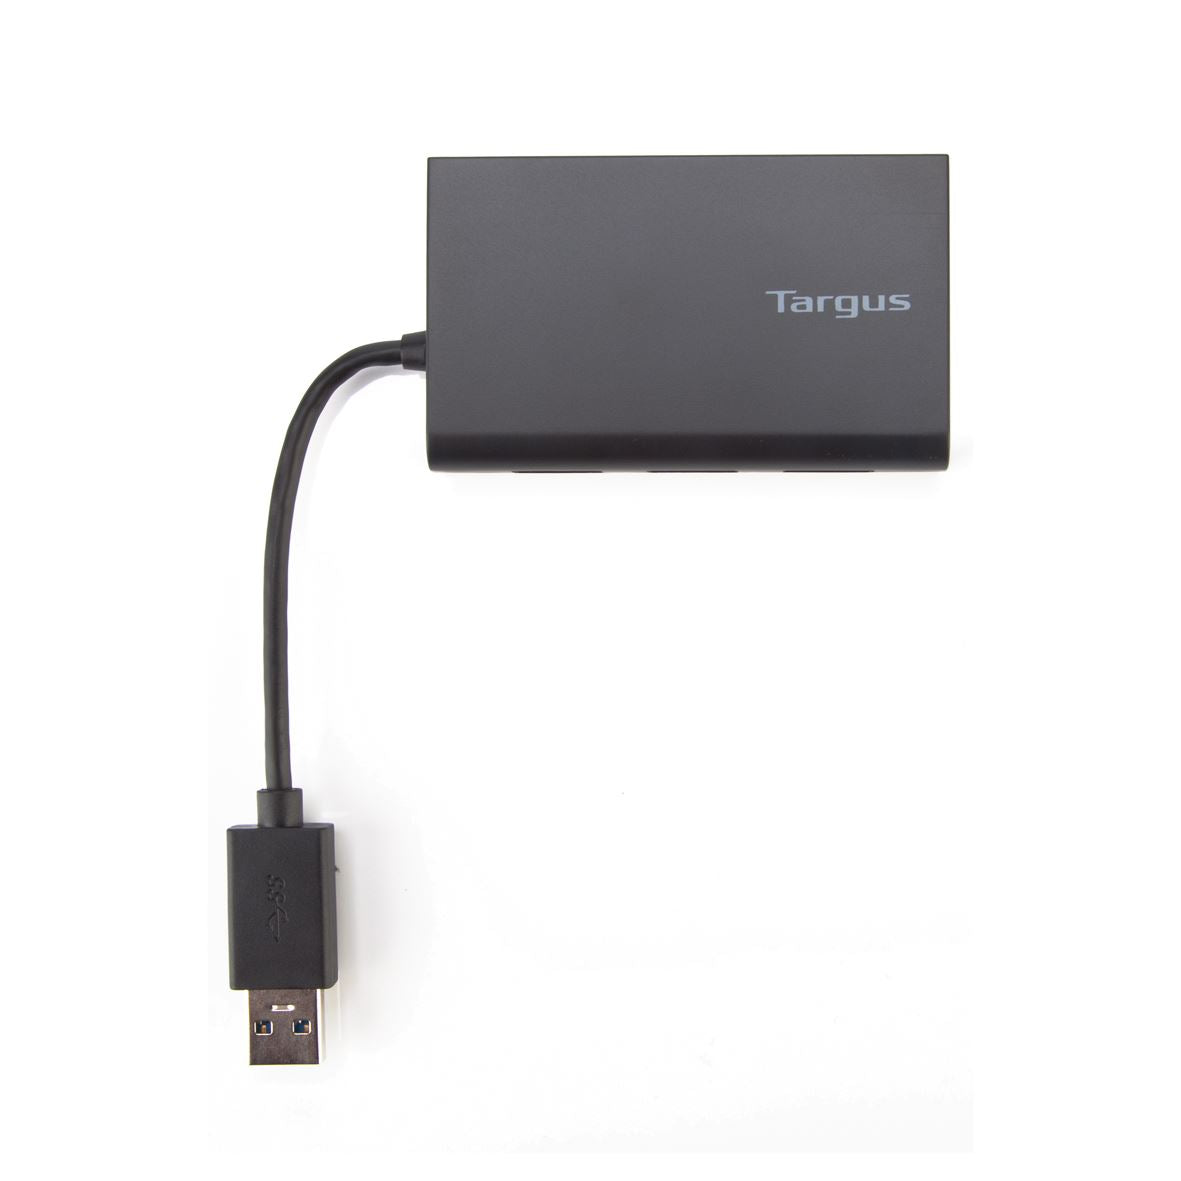 Targus USB Hub With Gigabit Ethernet 3.0 | Computer & Laptop Accessories | Halabh.com